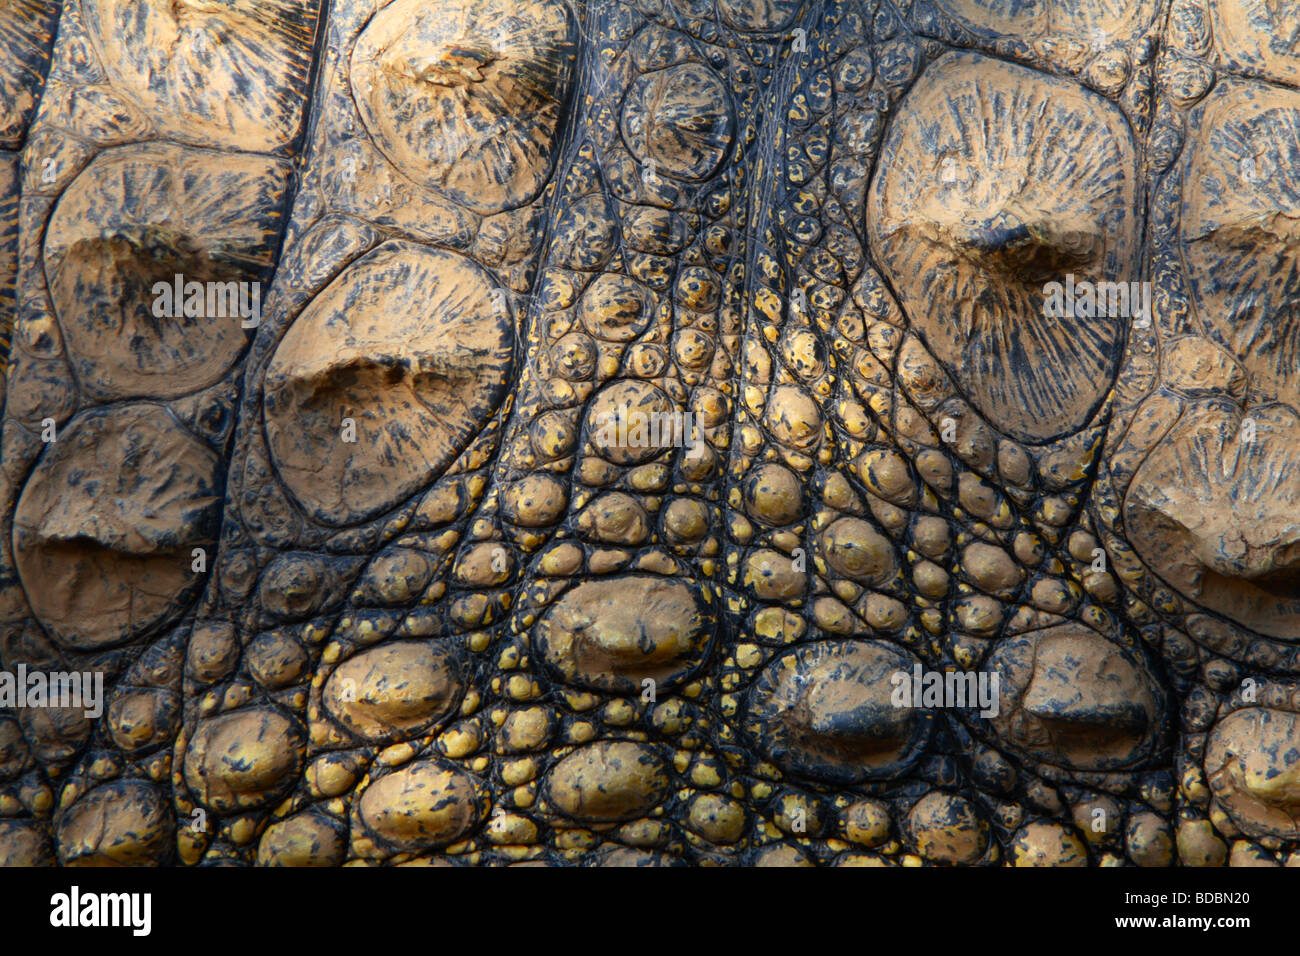 Macro photograph of skin or hide of a Nile Crocodile (crocodylus Niloticus) at the Kwena Crocodile Farm, South Africa Stock Photo